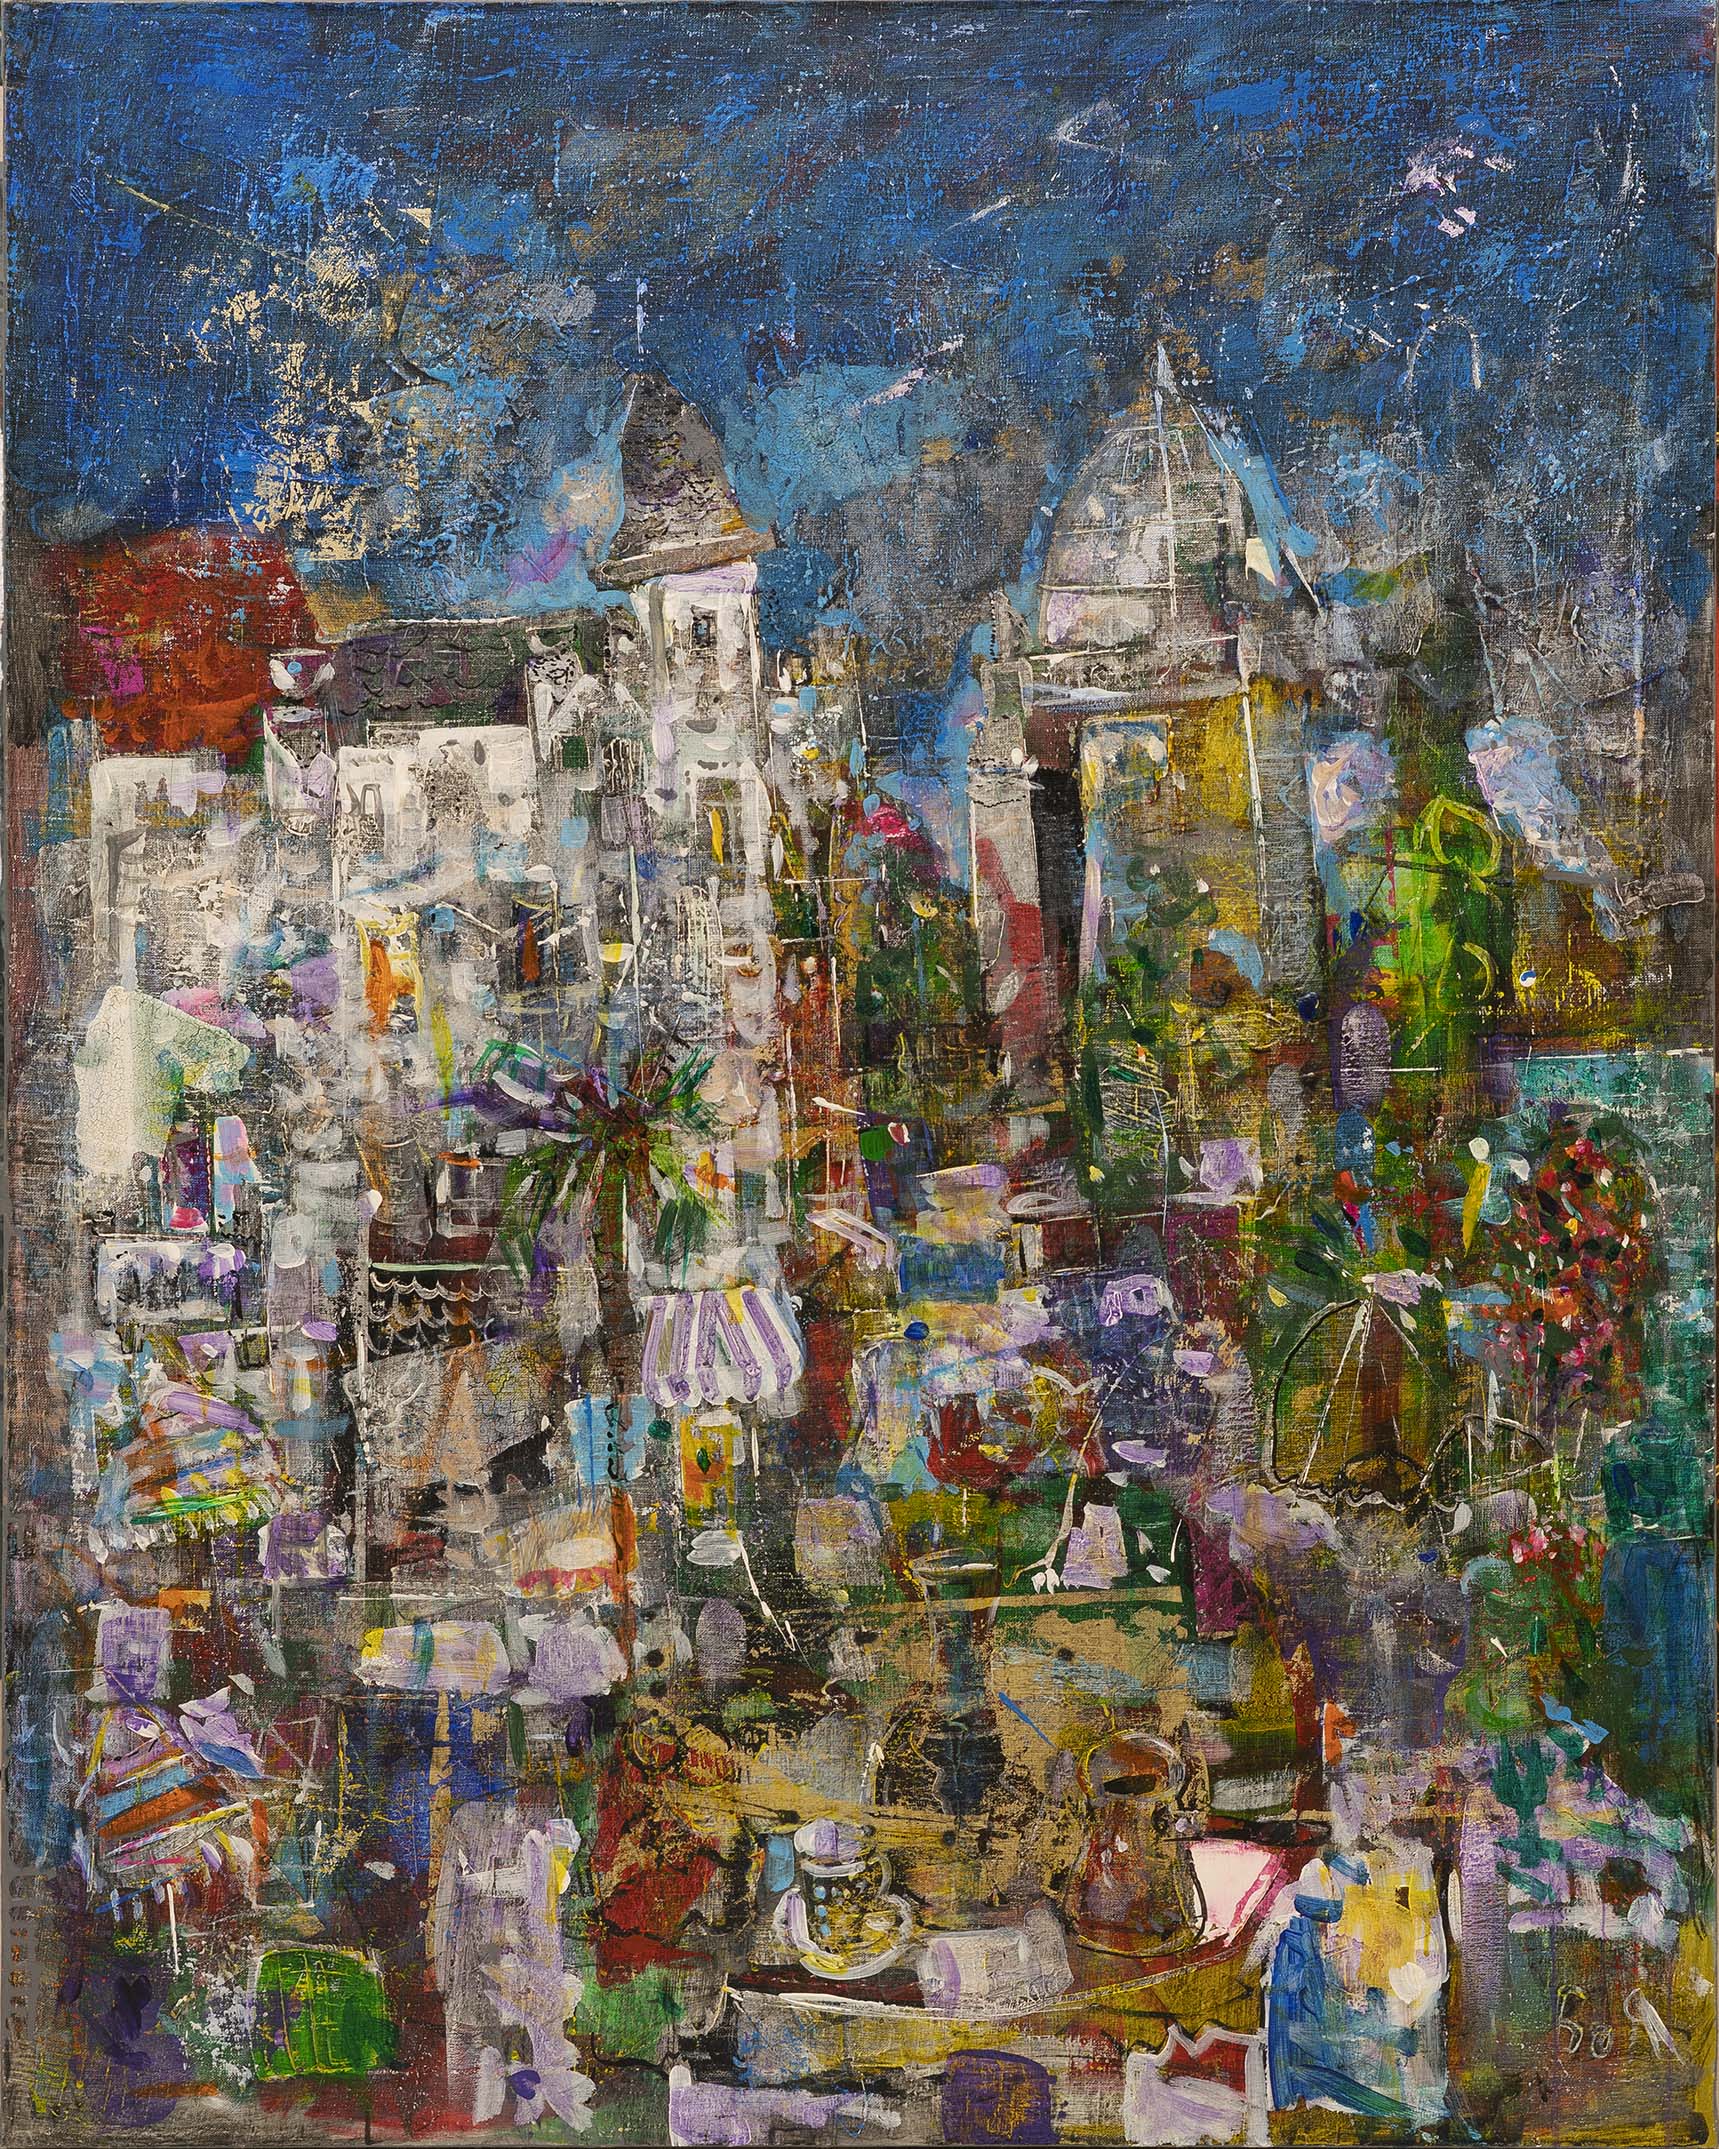 Southern Night - 1, Alexander Boyadzhan, Buy the painting Acrylic